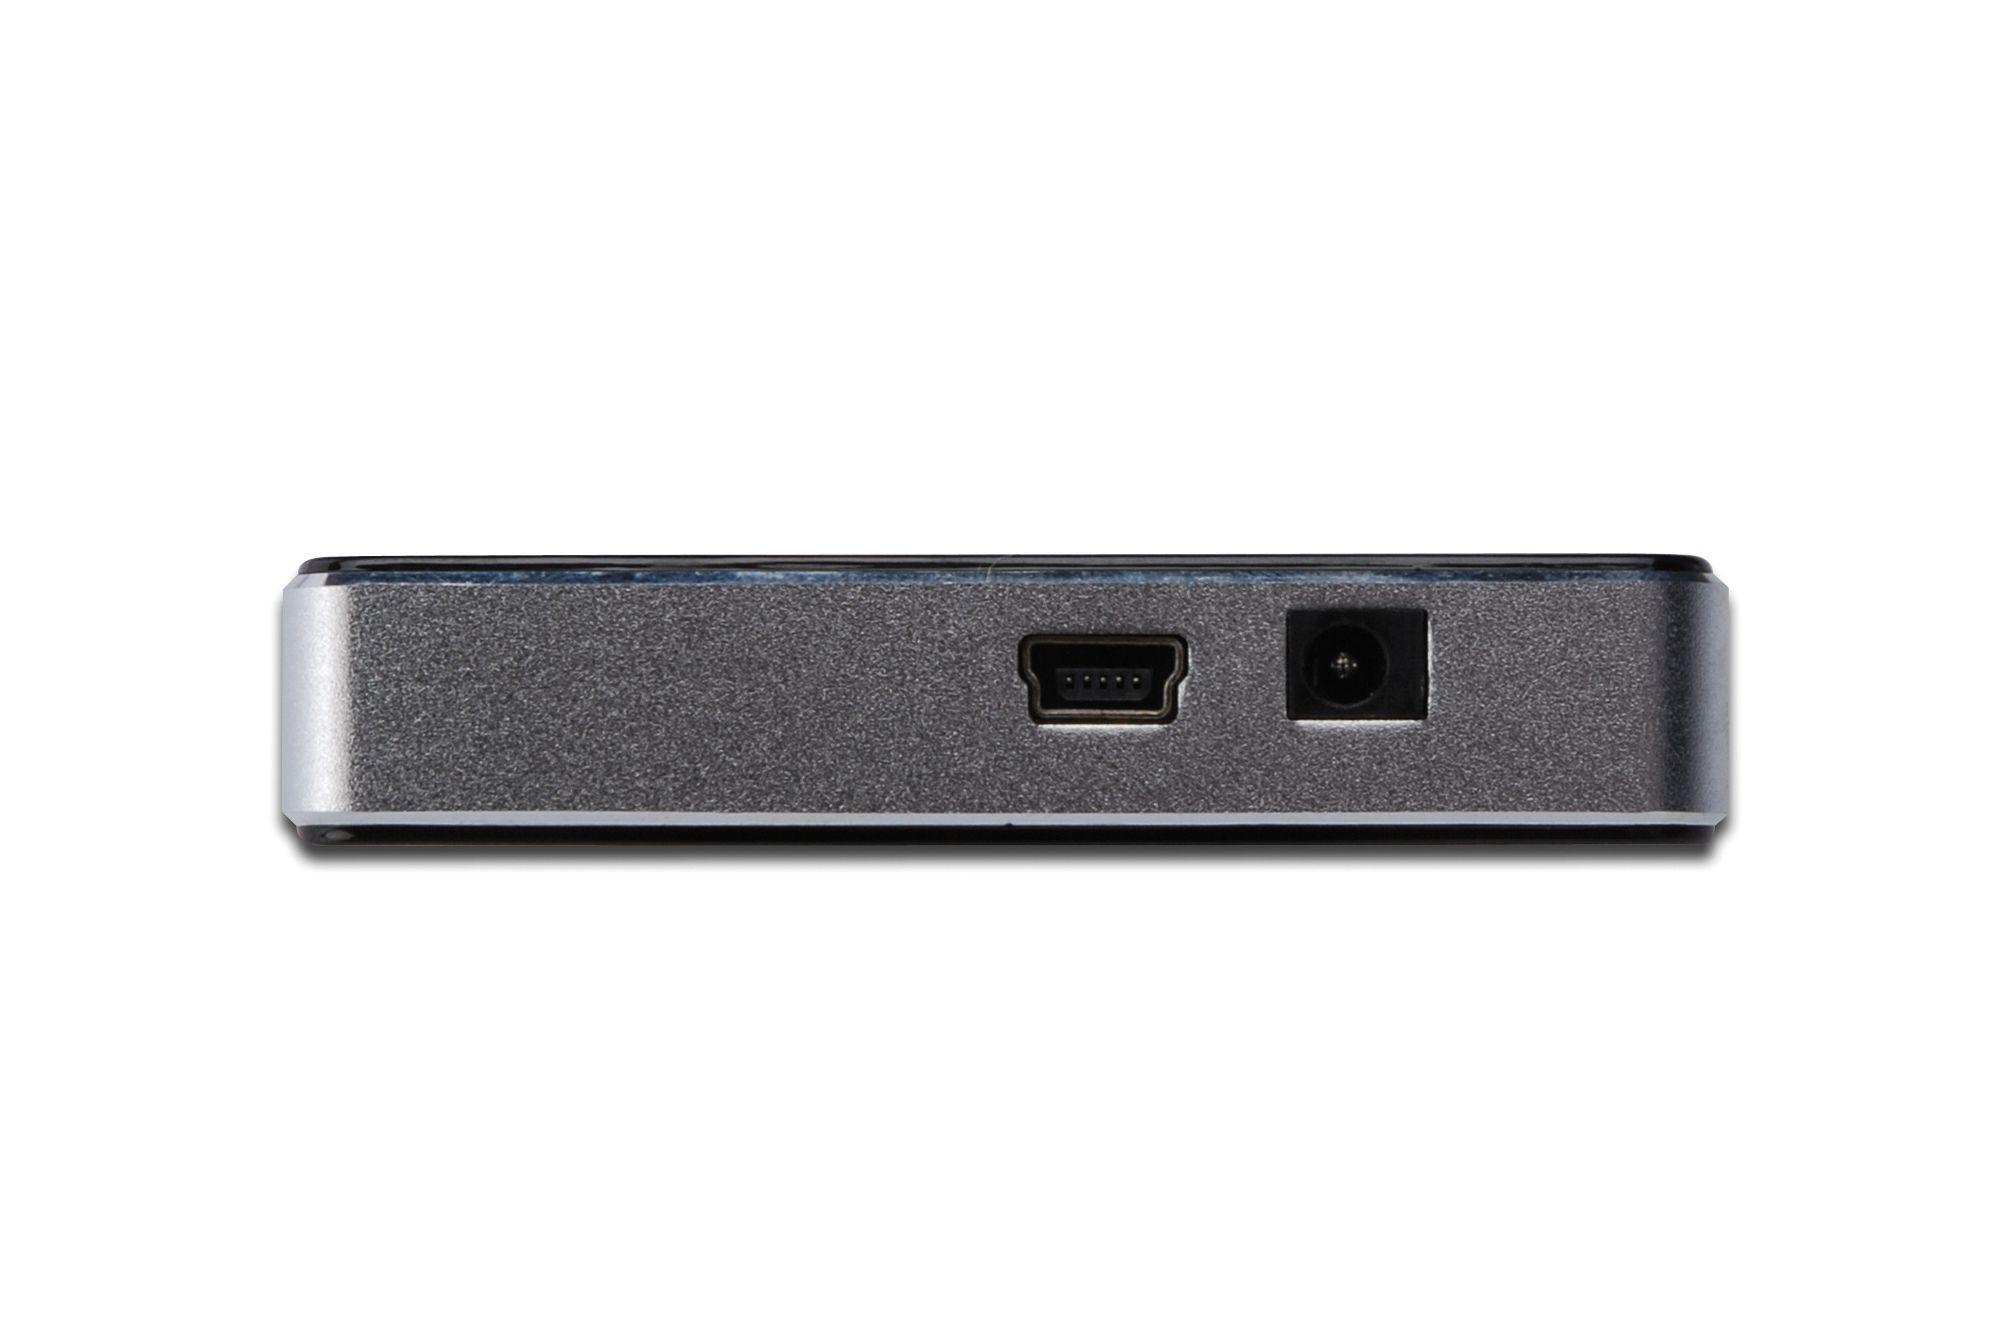 Digitus USB 2.0 4-Port Hub